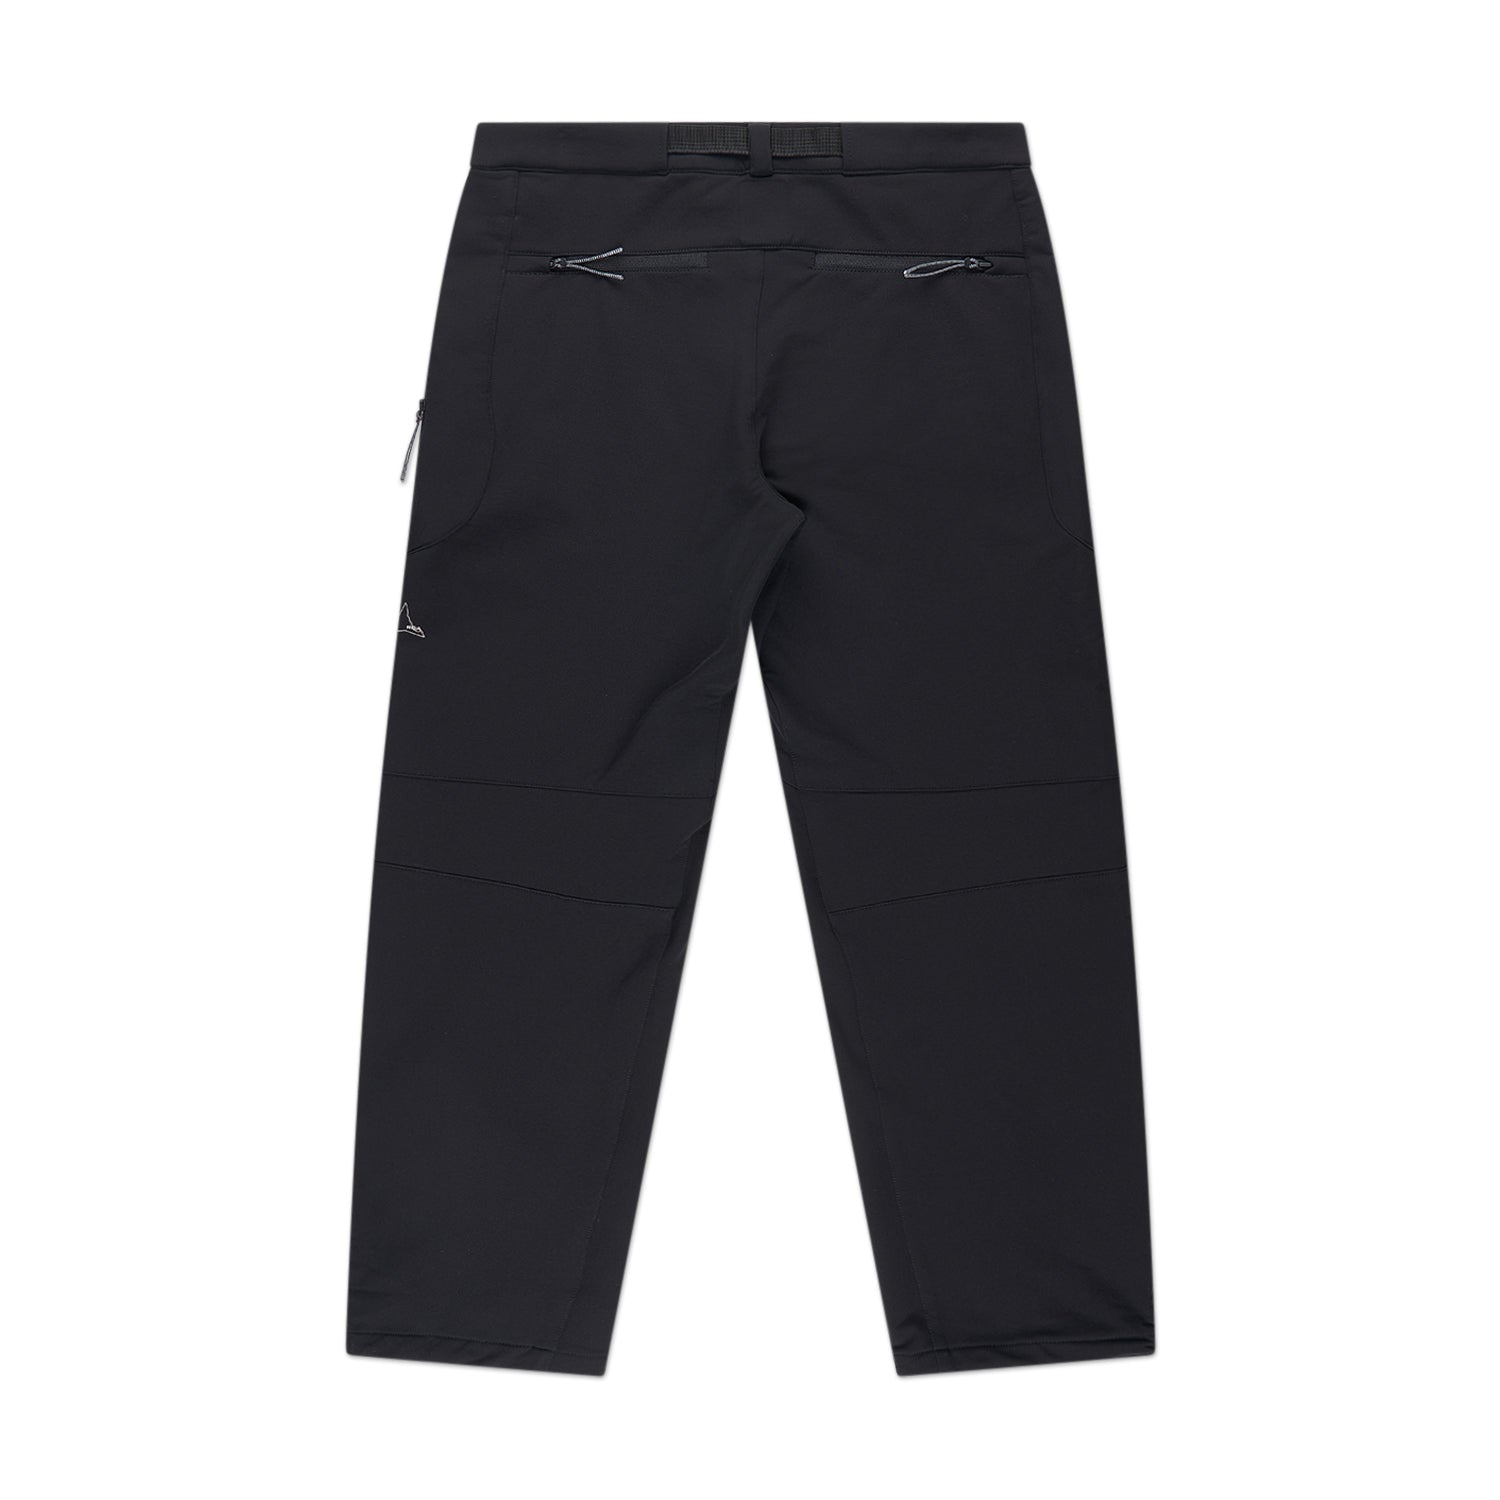 roa technical trousers softshell (black) - rbmw020fa08 